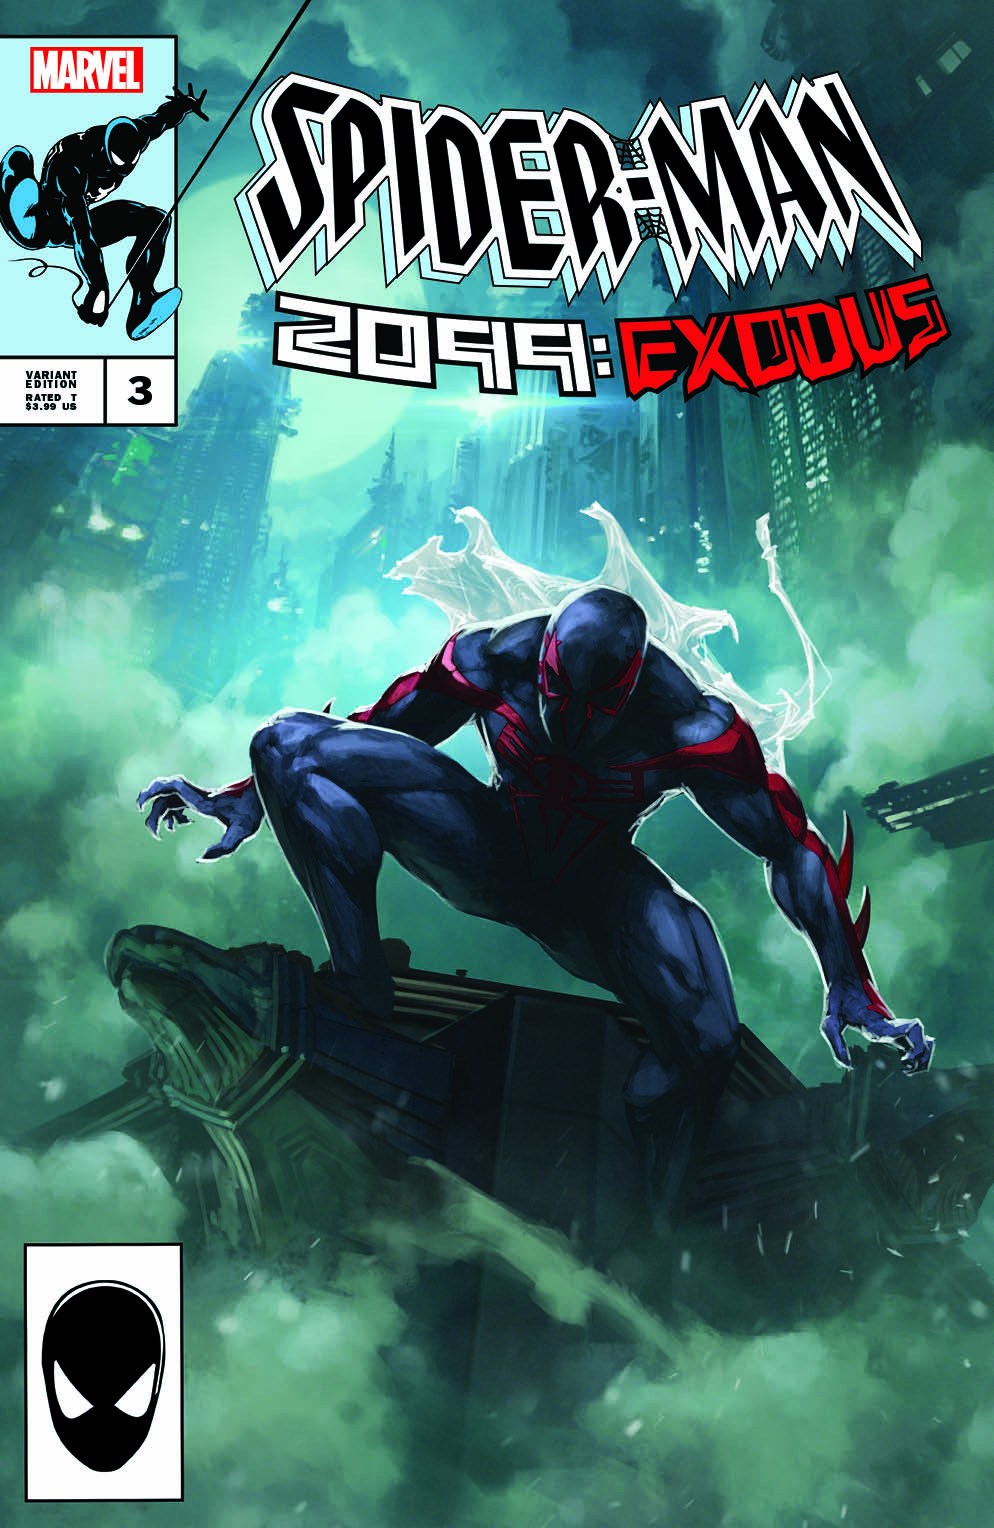 06/29/2022 SPIDER-MAN 2099 EXODUS #3 SKAN SRISUWAN EXCLUSIVE VARIANT OPTIONS